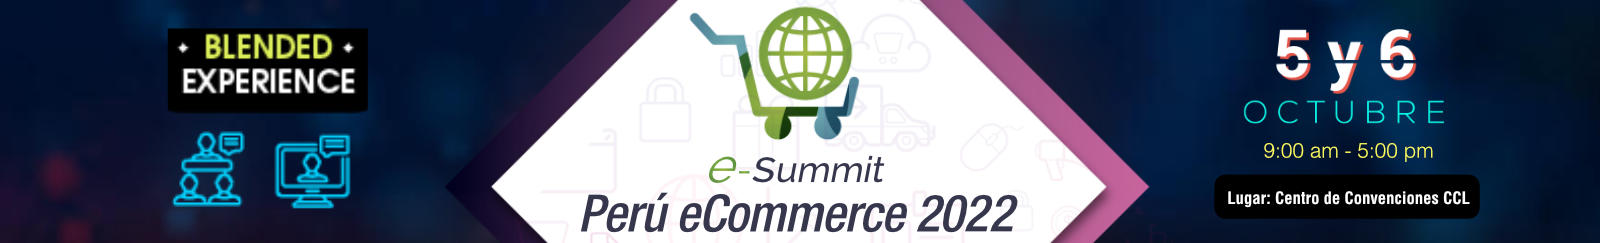 e-Summit_PERU-ECOMMERCE-2022-banner-cabecera